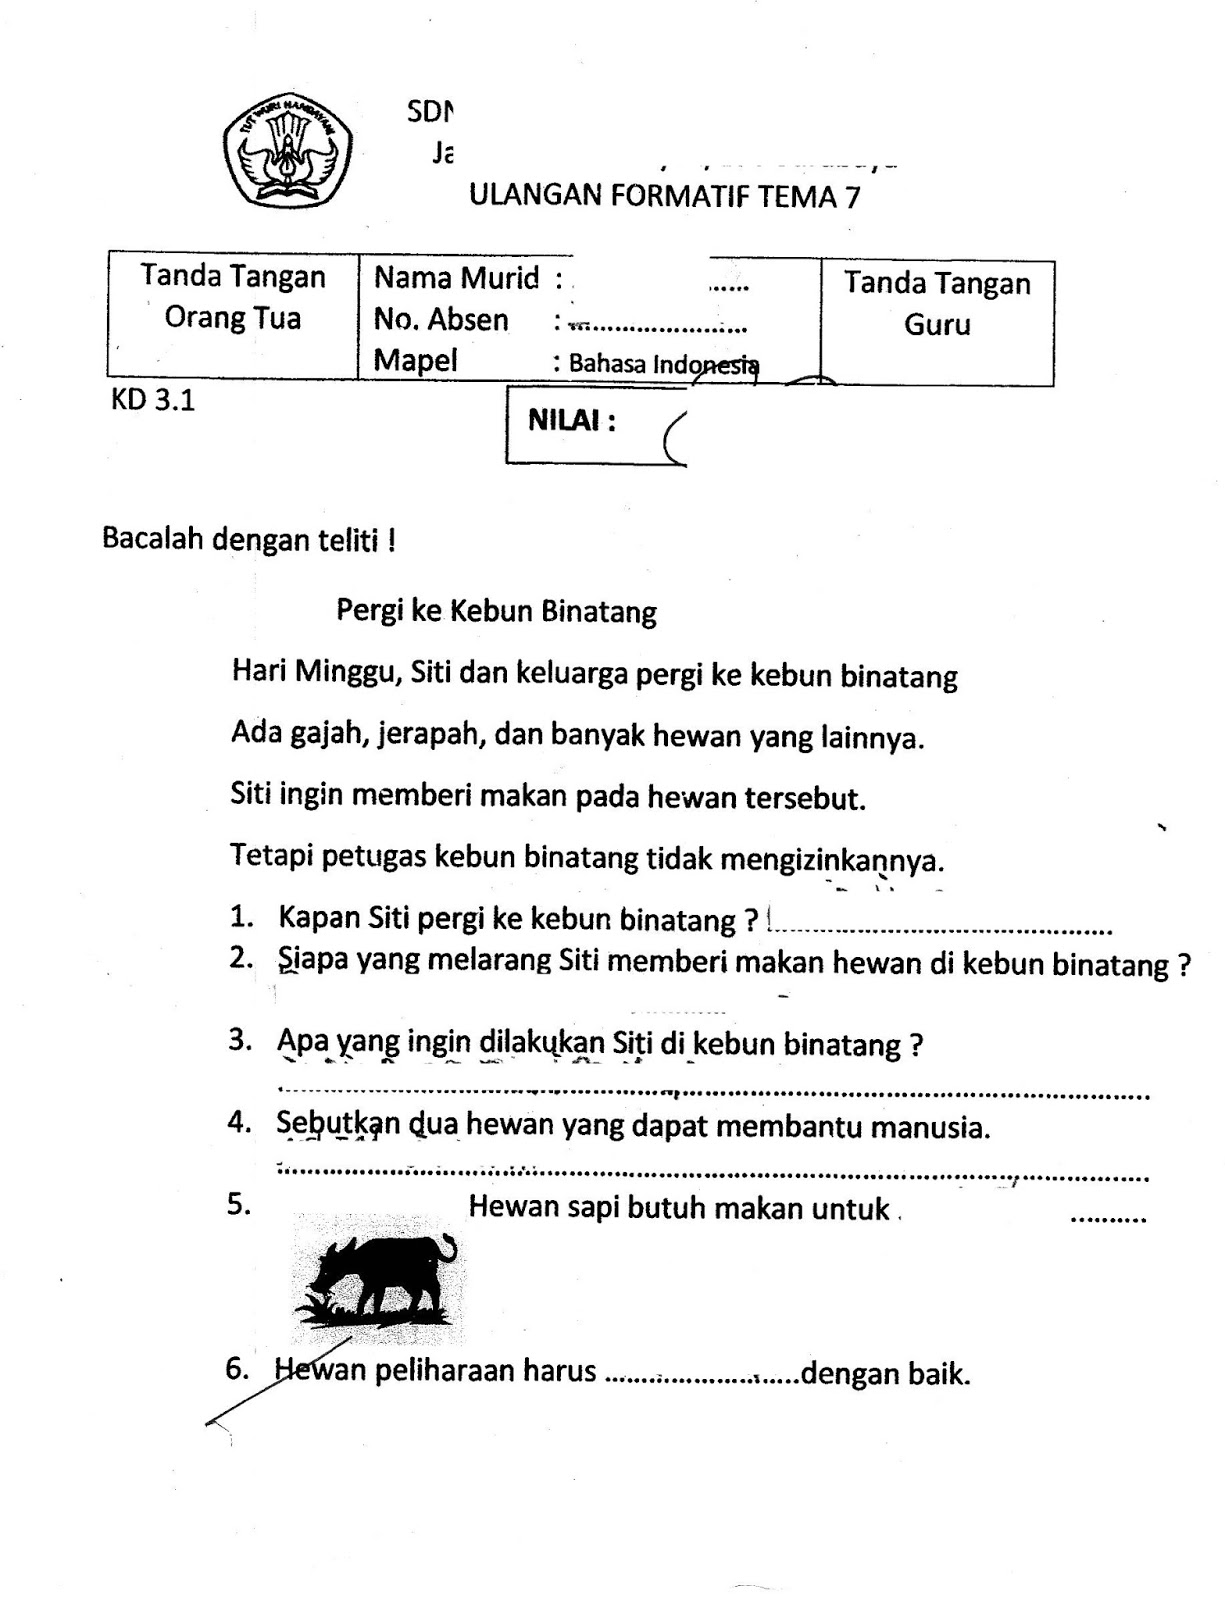 Formatif Tema 7 Bahasa Indonesia SD Kelas 1 TA 2015 2016 Kurikulum2013